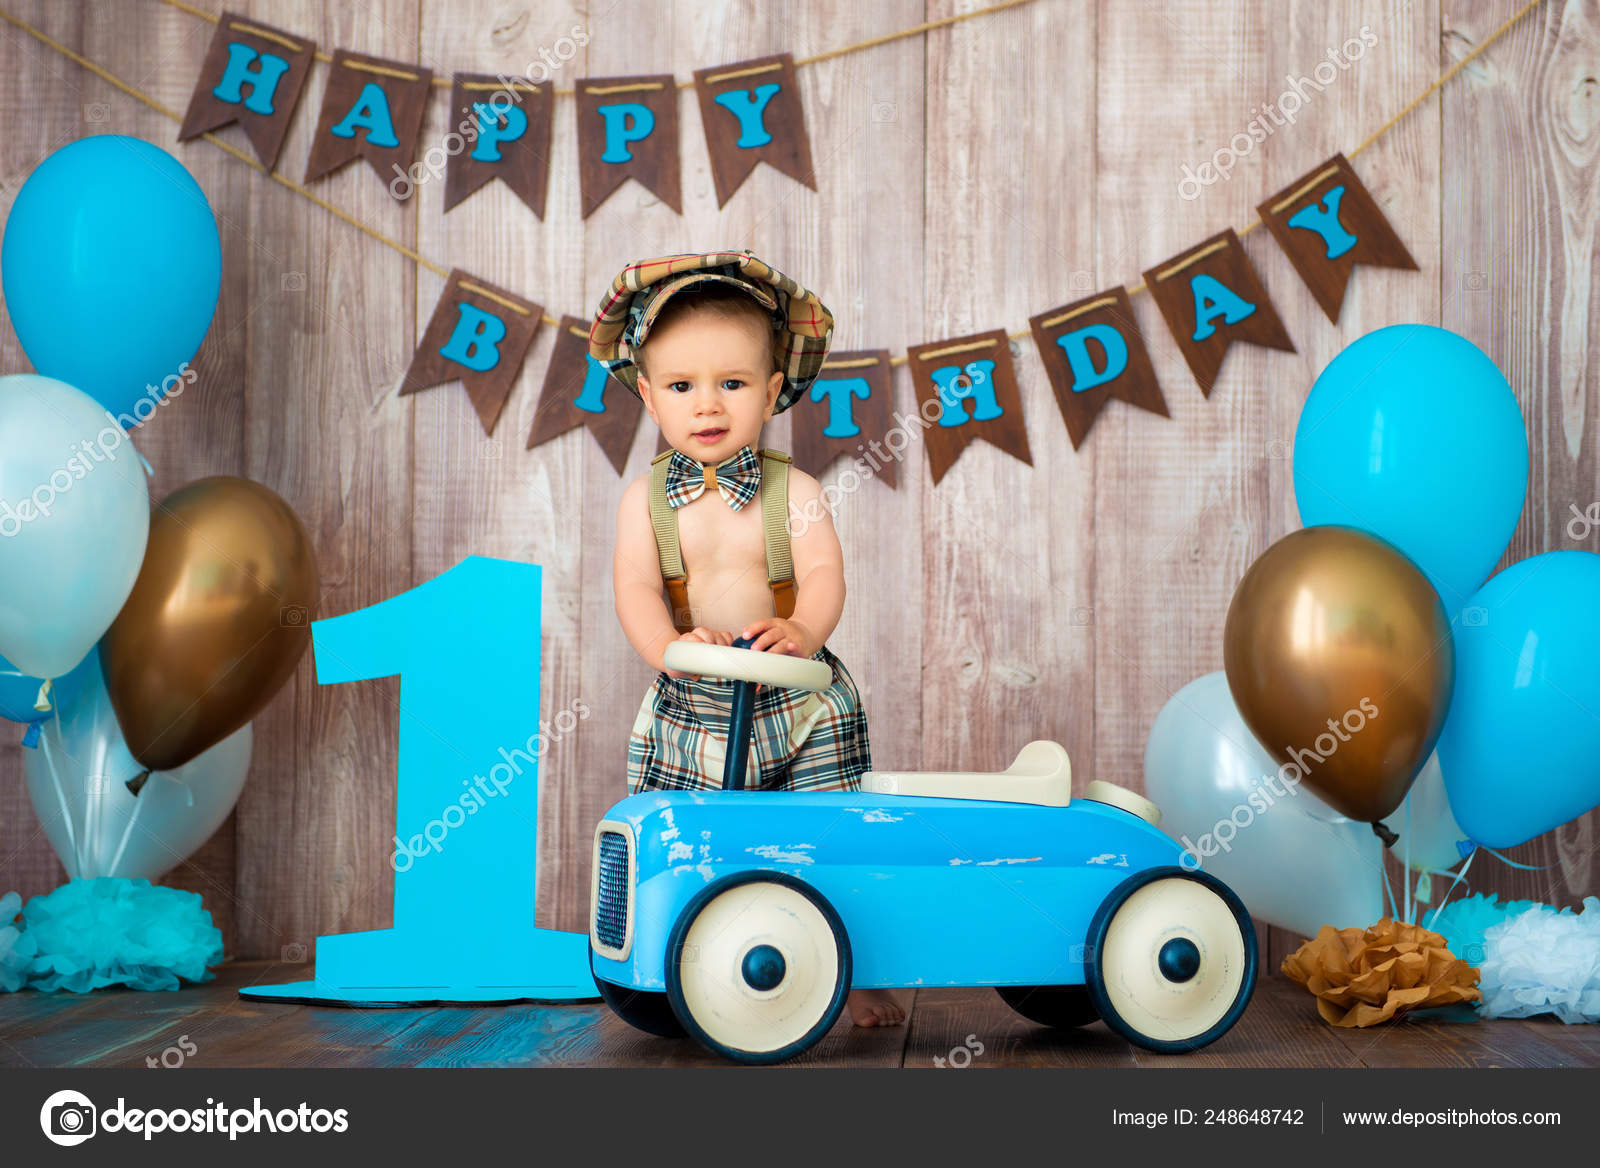 https://st4.depositphotos.com/1290955/24864/i/1600/depositphotos_248648742-stock-photo-little-boy-kid-gentleman-in.jpg